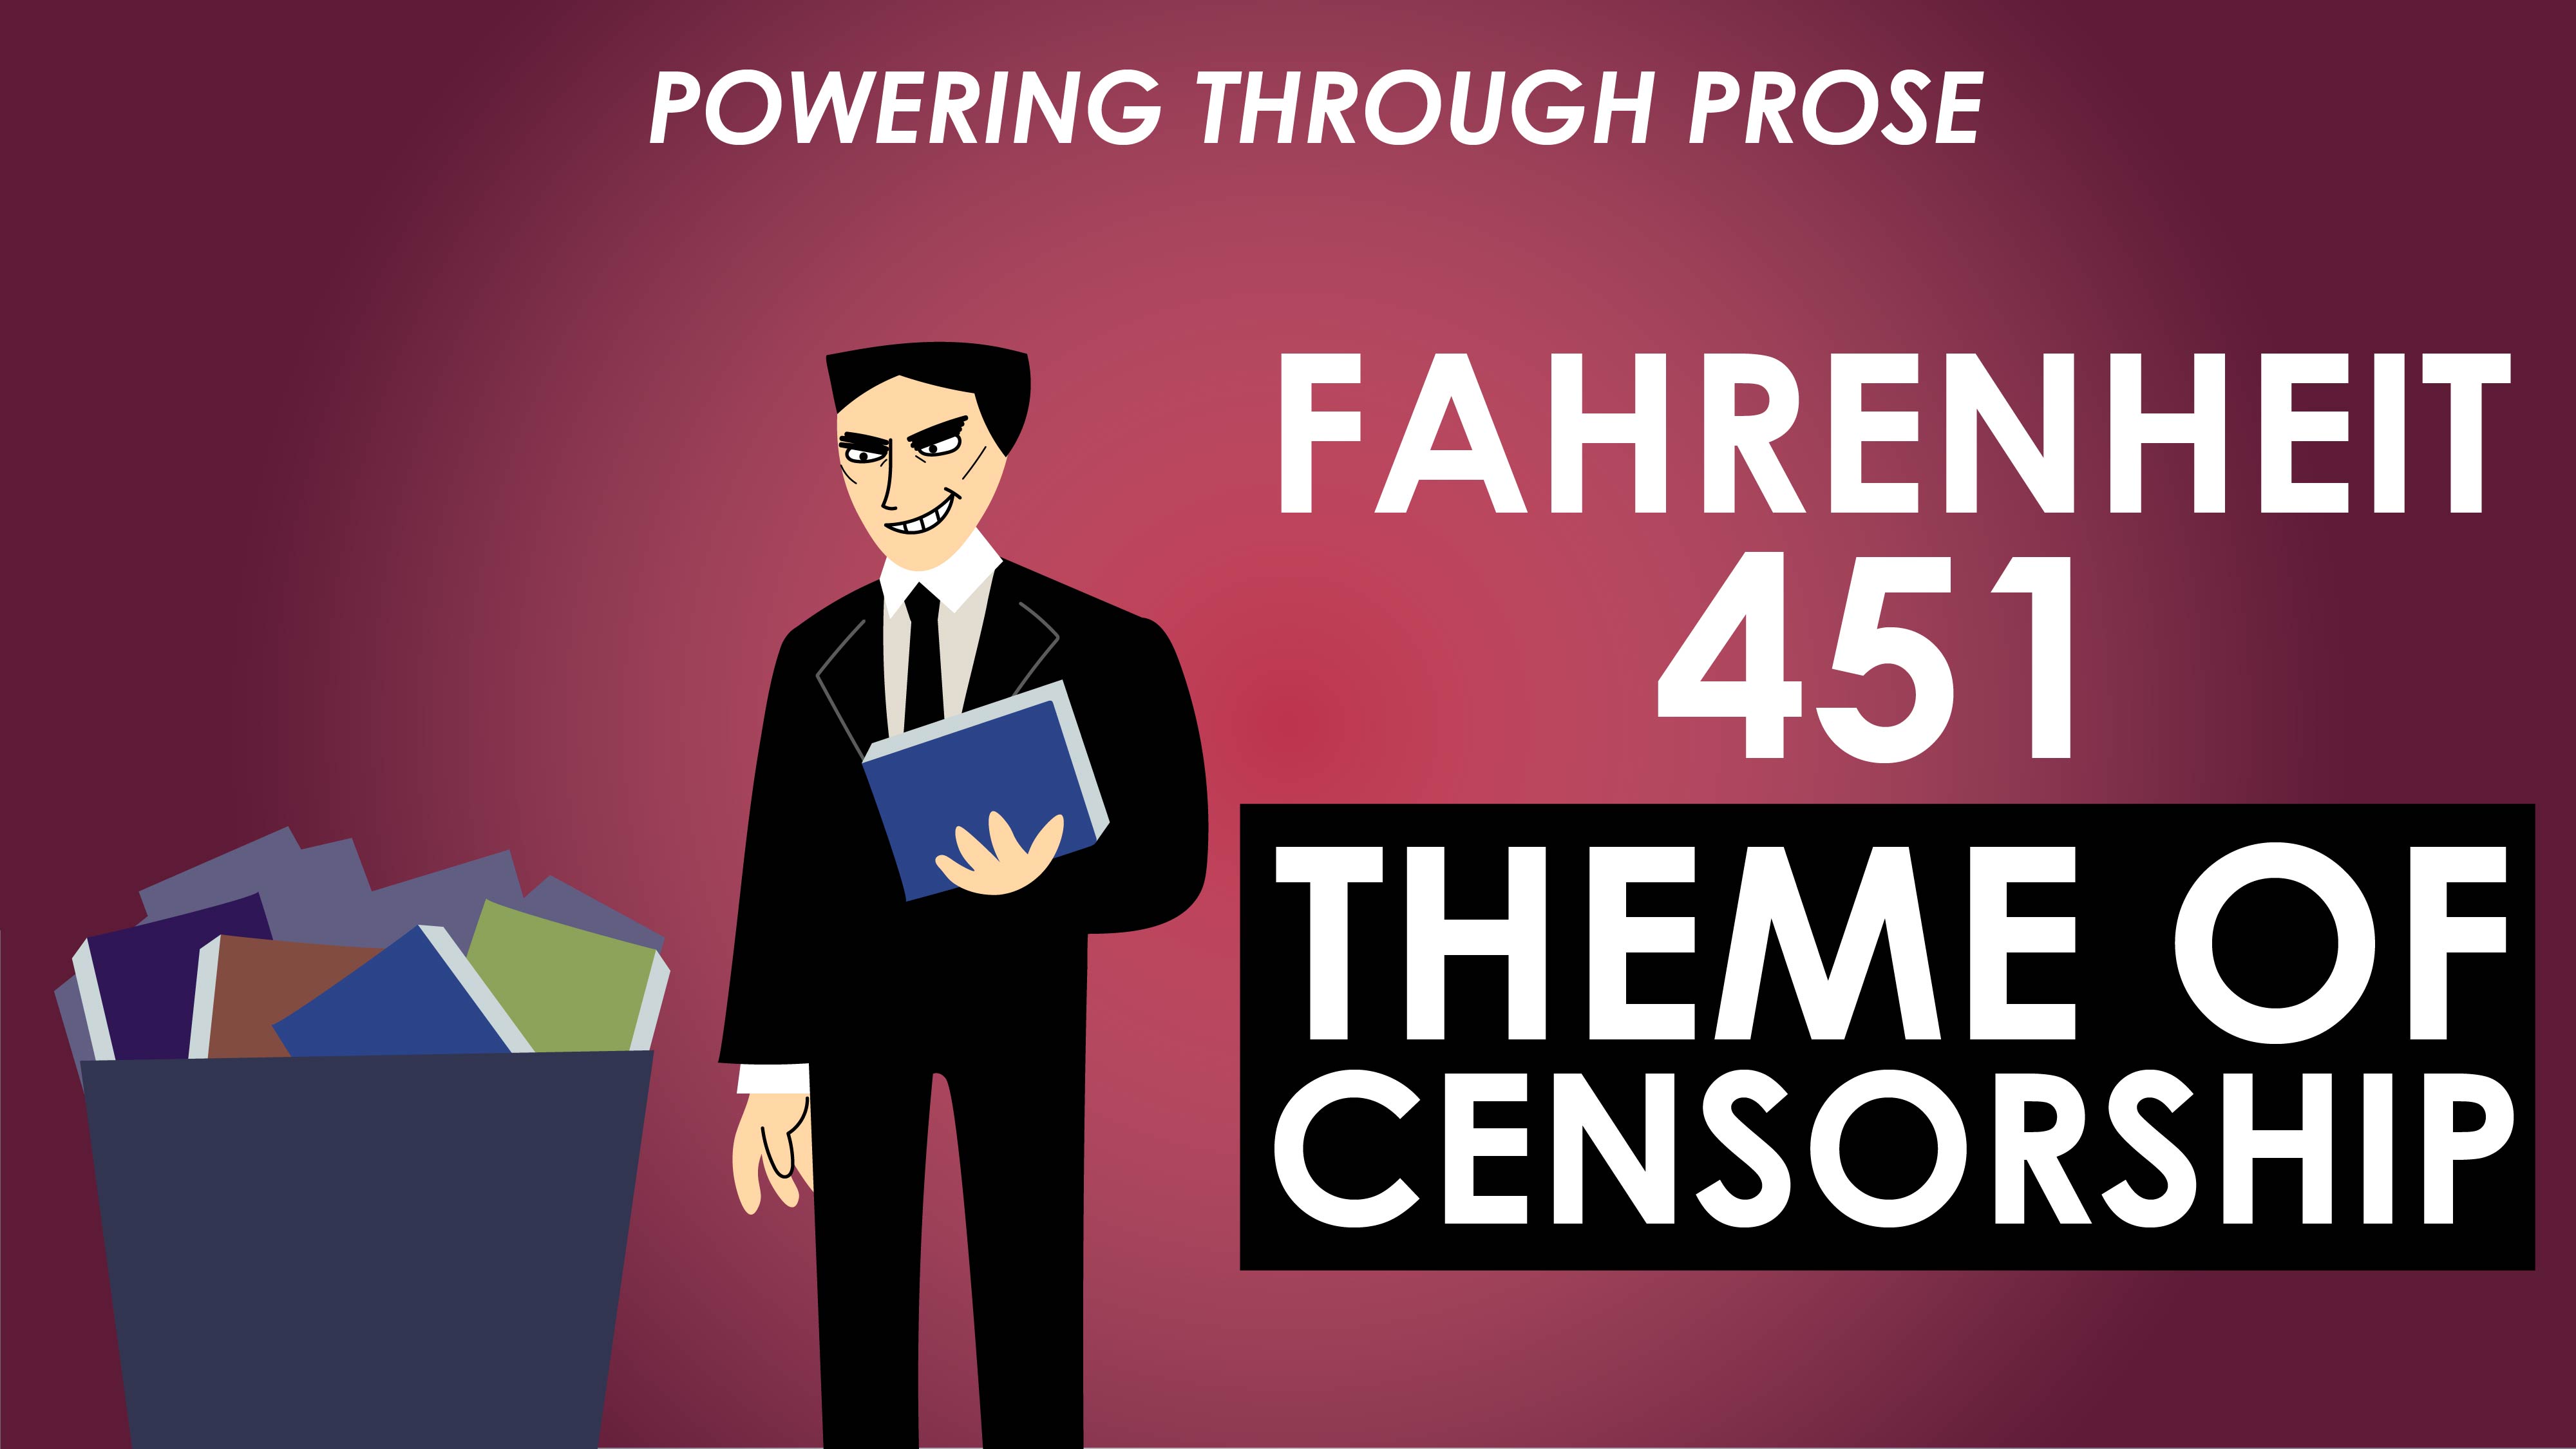 Fahrenheit 451 - Ray Bradbury - Theme of Censorship - Powering Through Prose Series